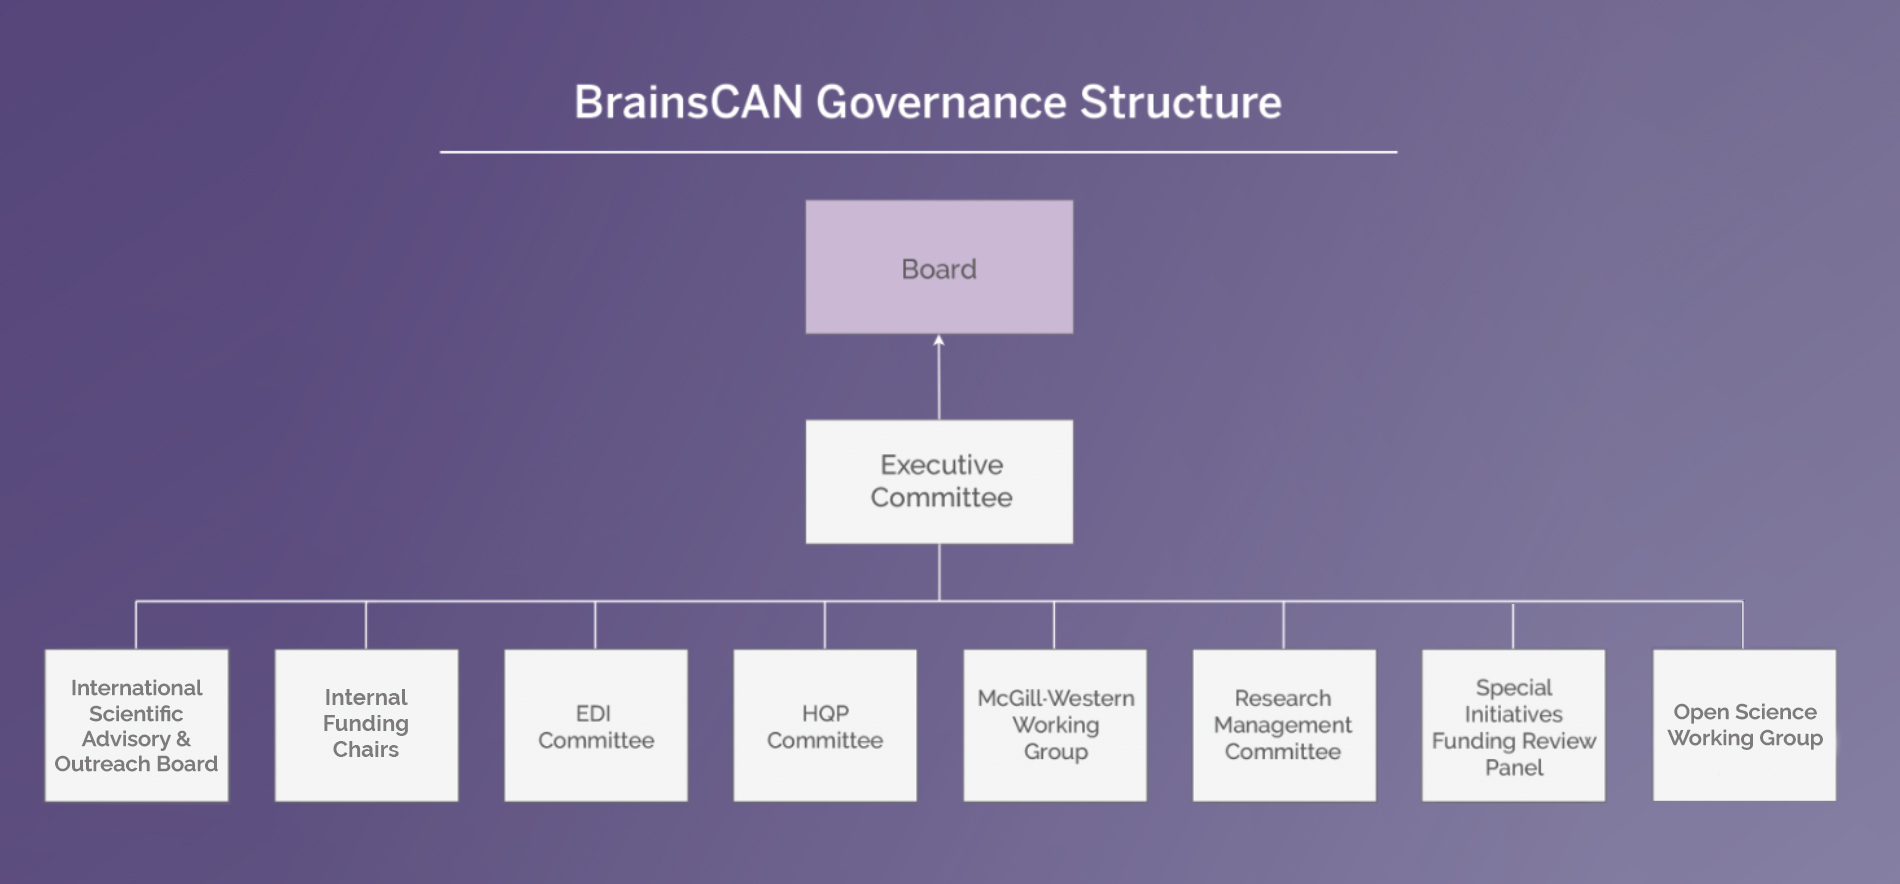 BrainsCAN Governance